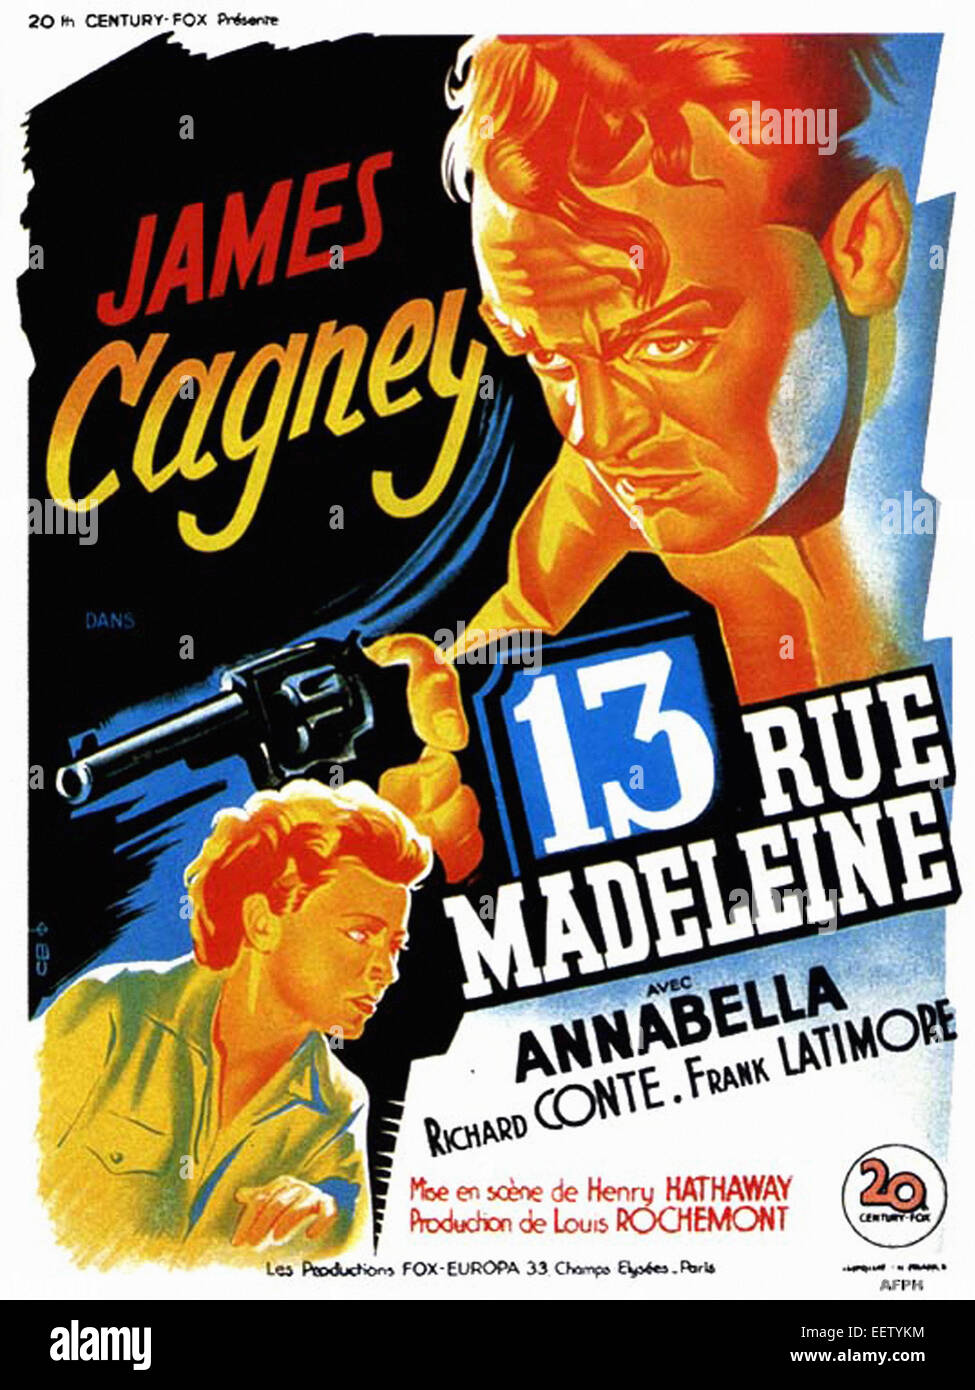 13 rue Madeleine - James Cagney - Movie Poster Stock Photo